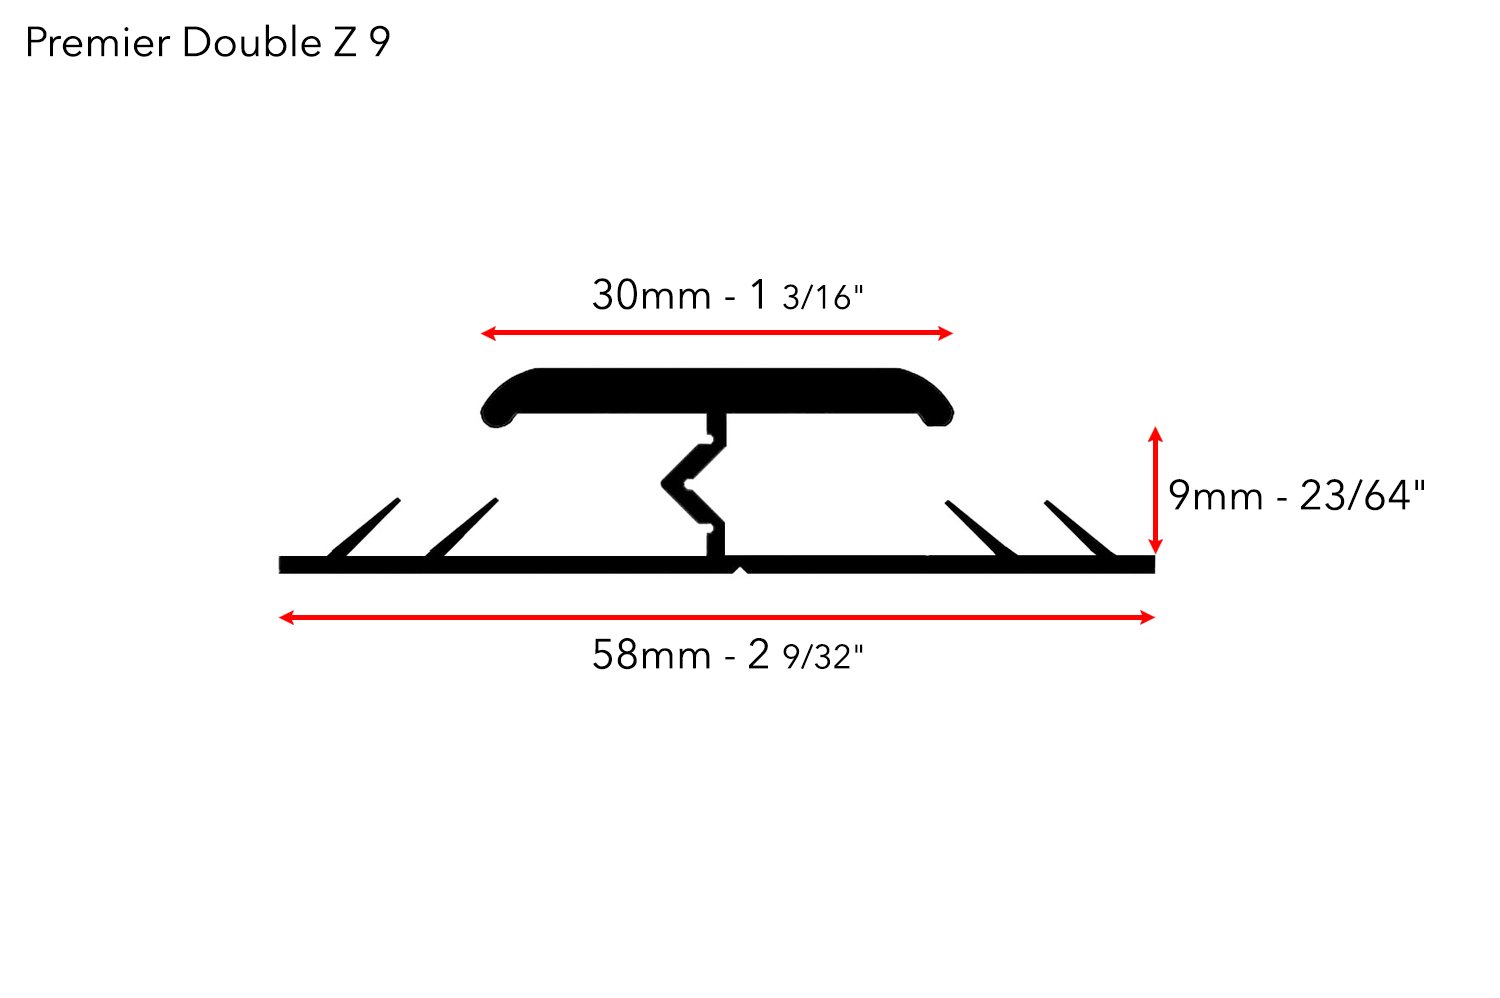 Double Z 9 measurements .jpg